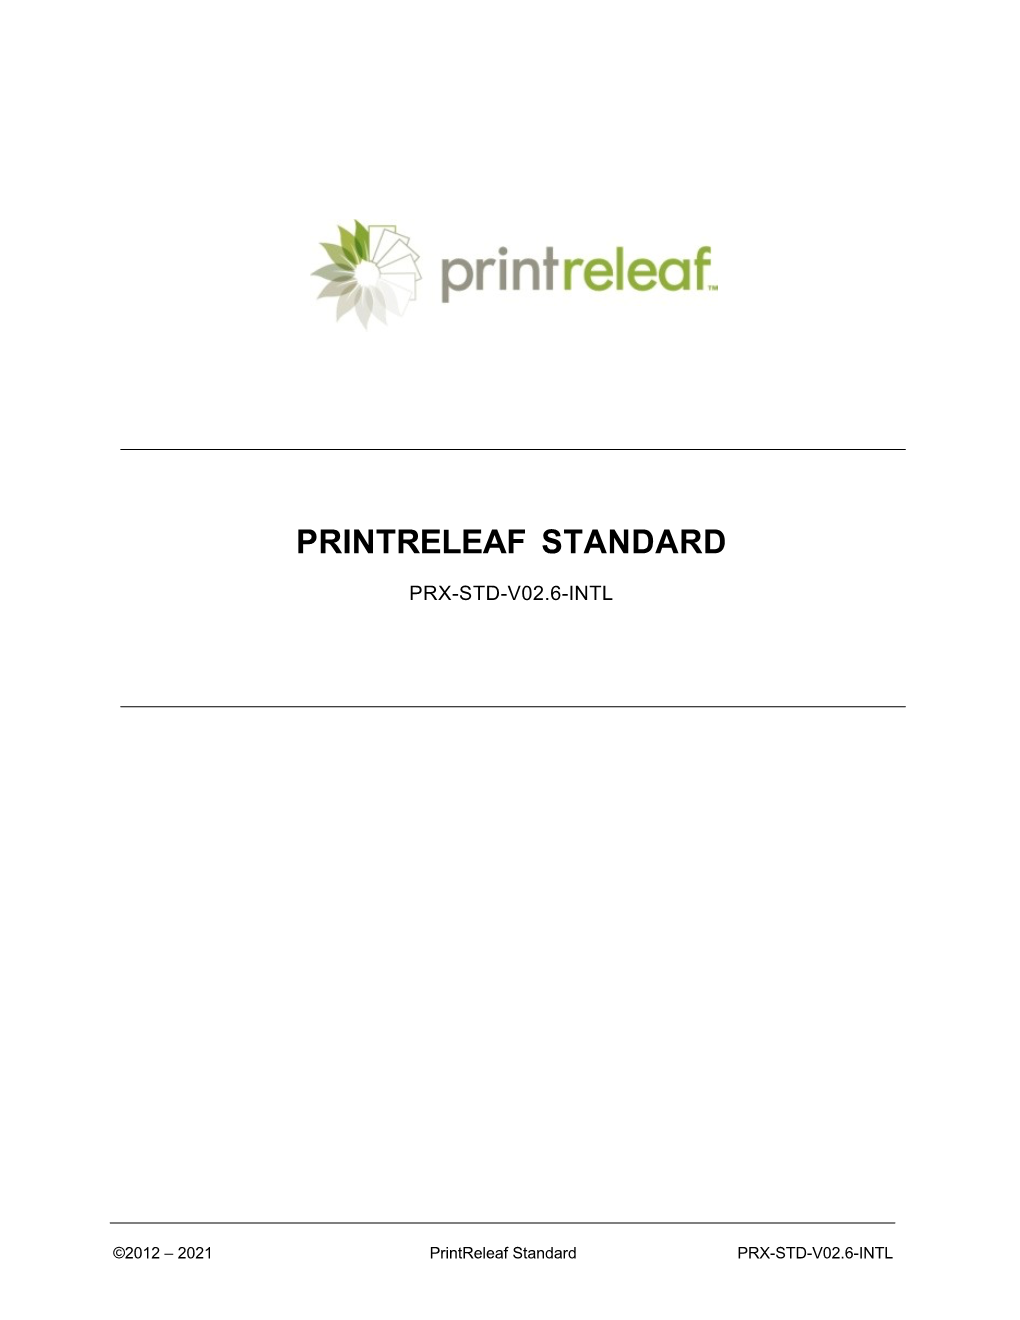 Printreleaf Standard